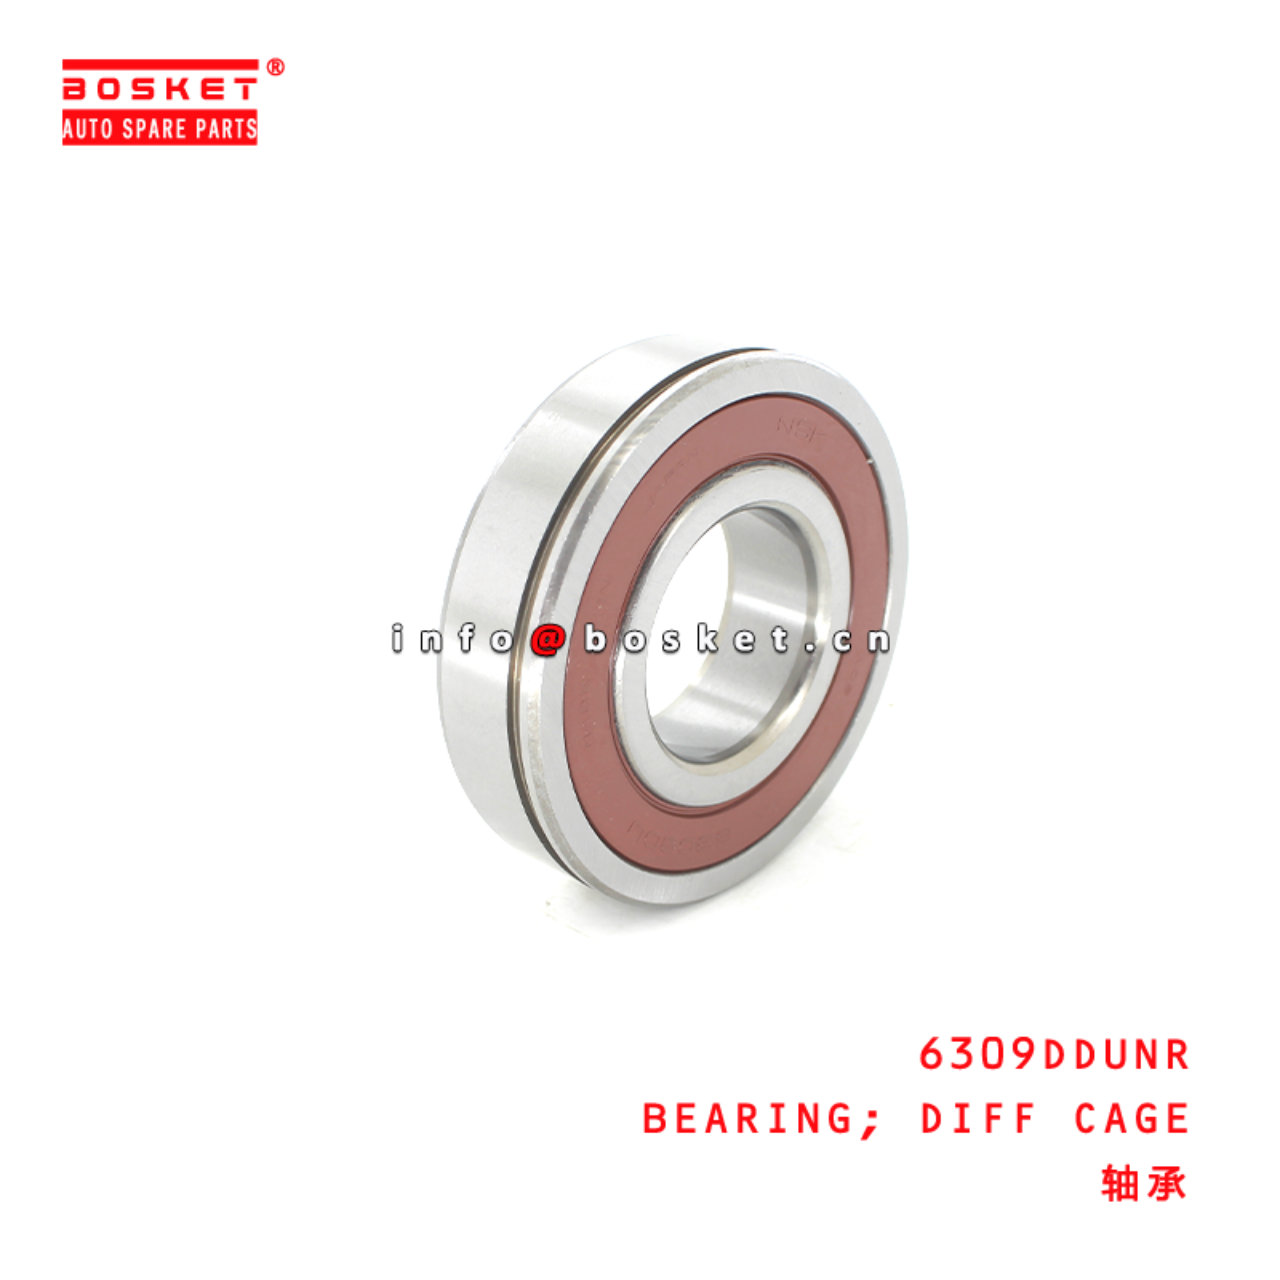 6309DDUNR Outer Rear Bearing Suitable for ISUZU